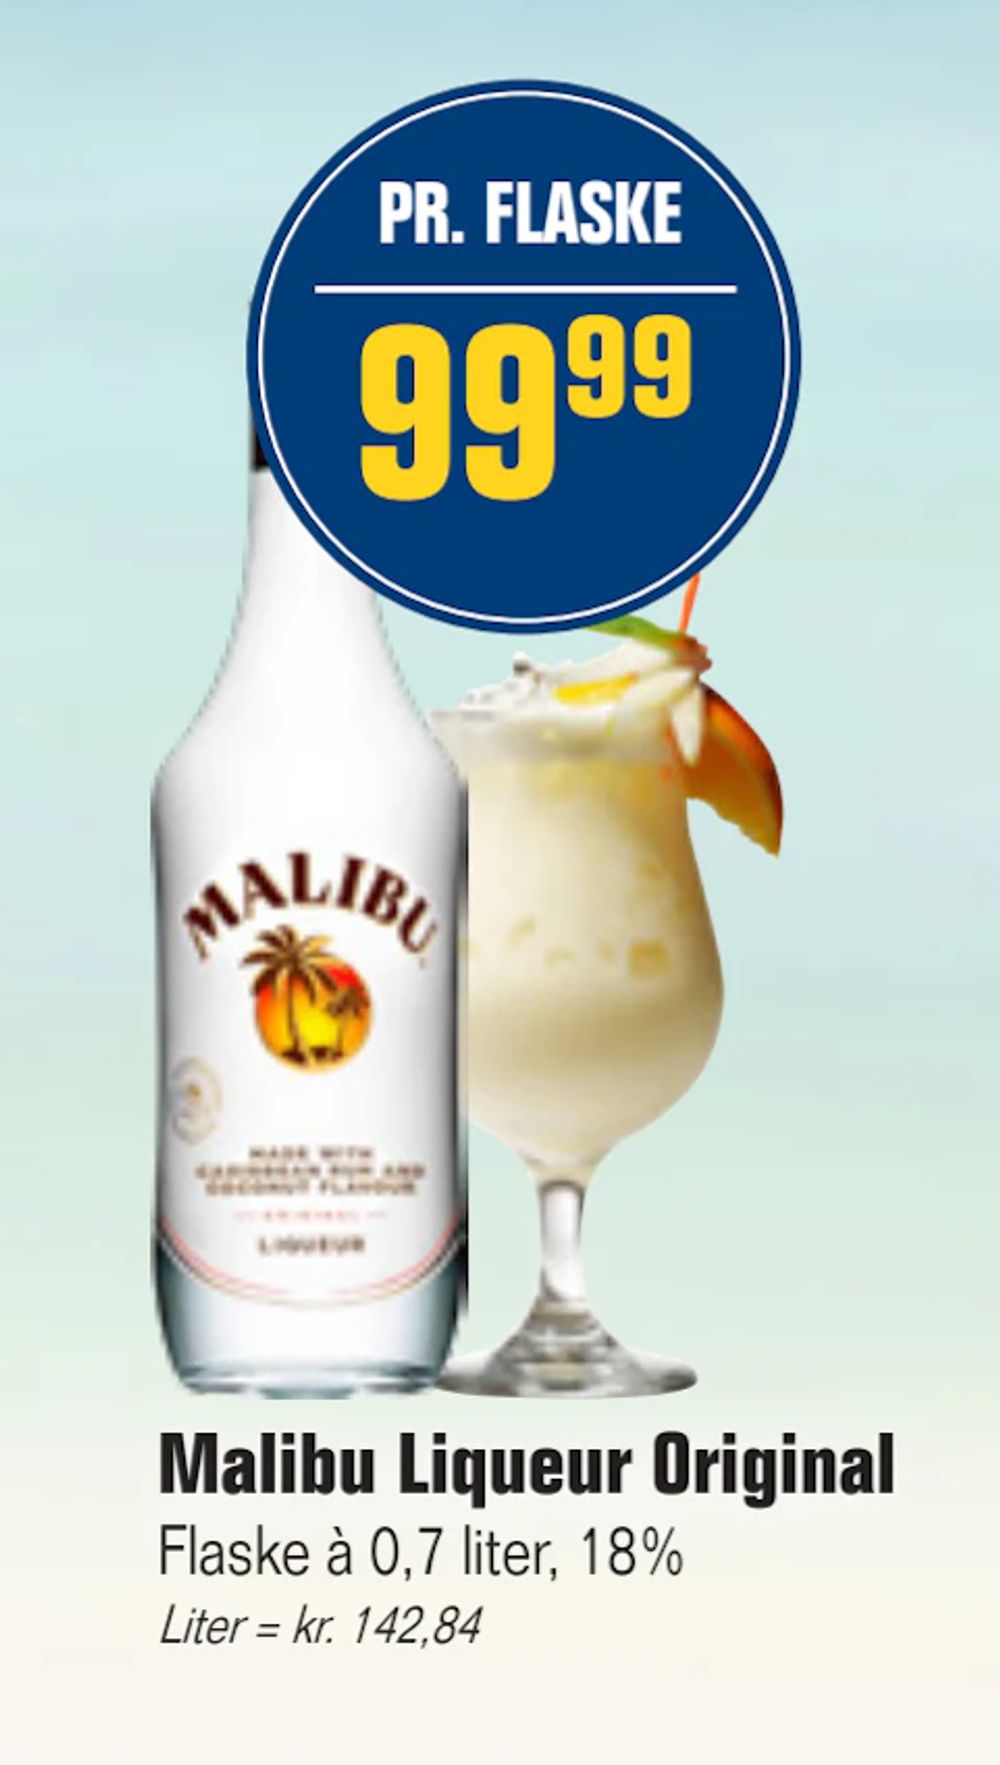 Tilbud på Malibu Liqueur Original fra Otto Duborg til 99,99 kr.